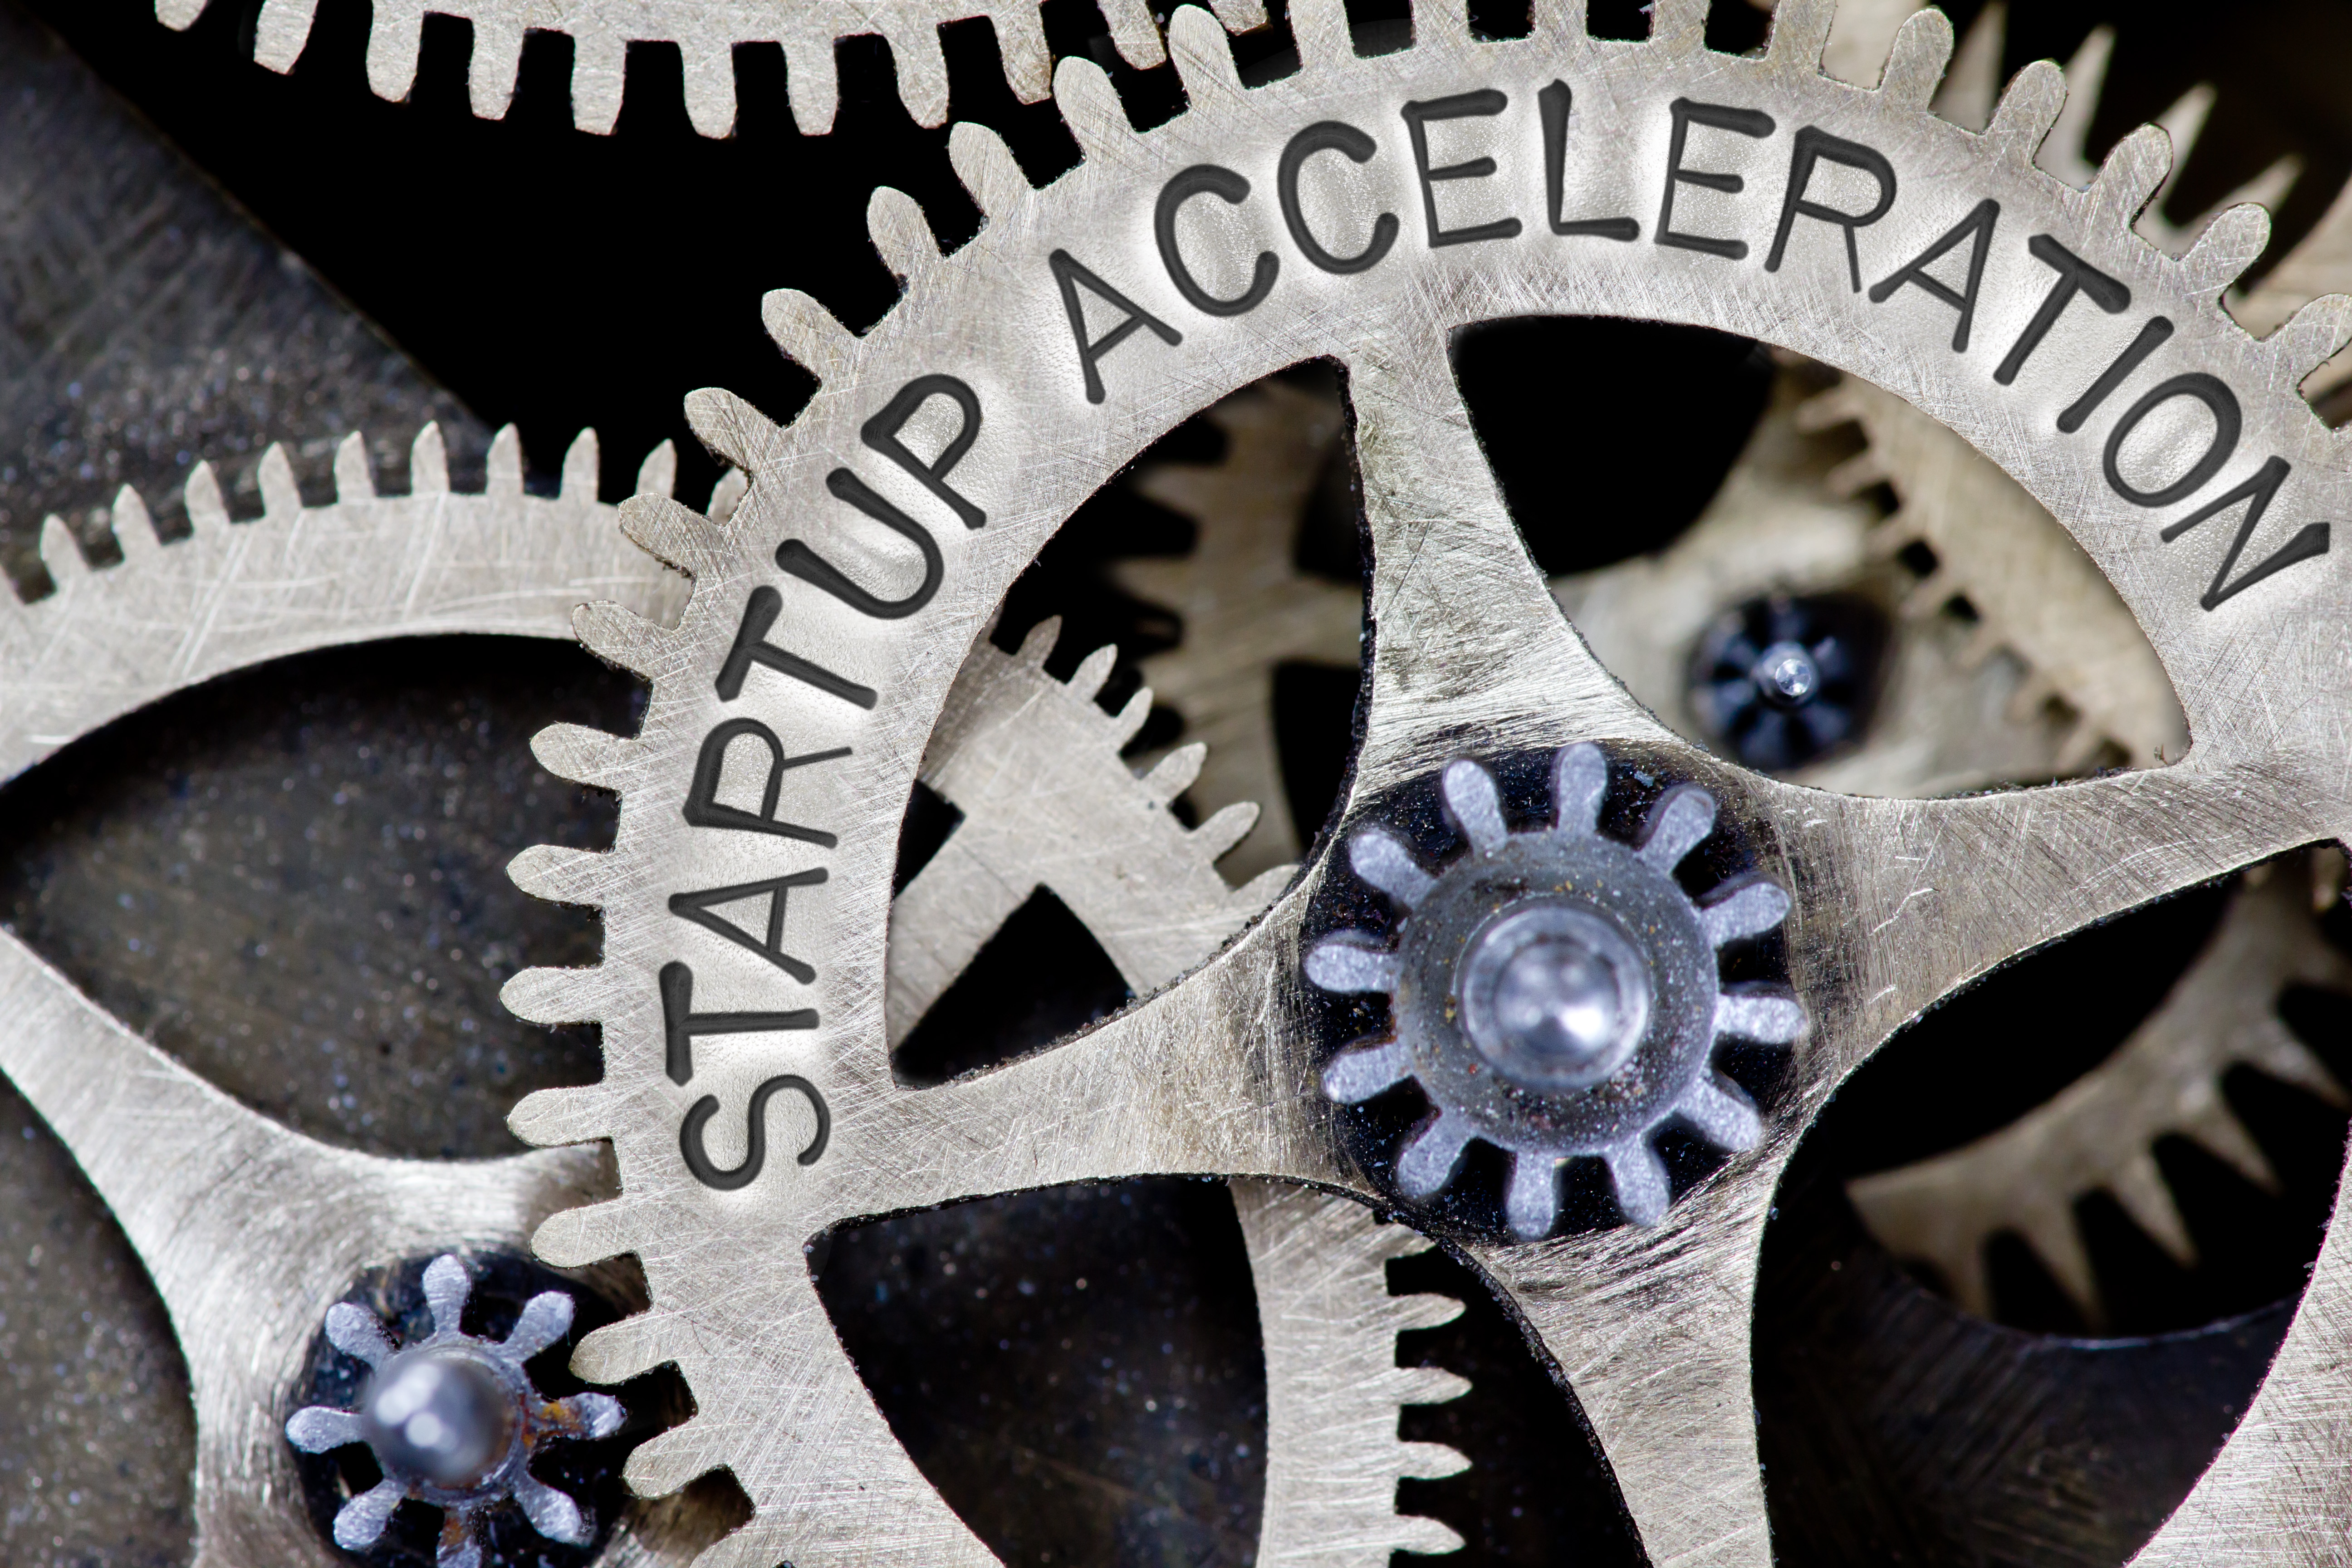 Flipkart launches its first accelerator program to mentor startups